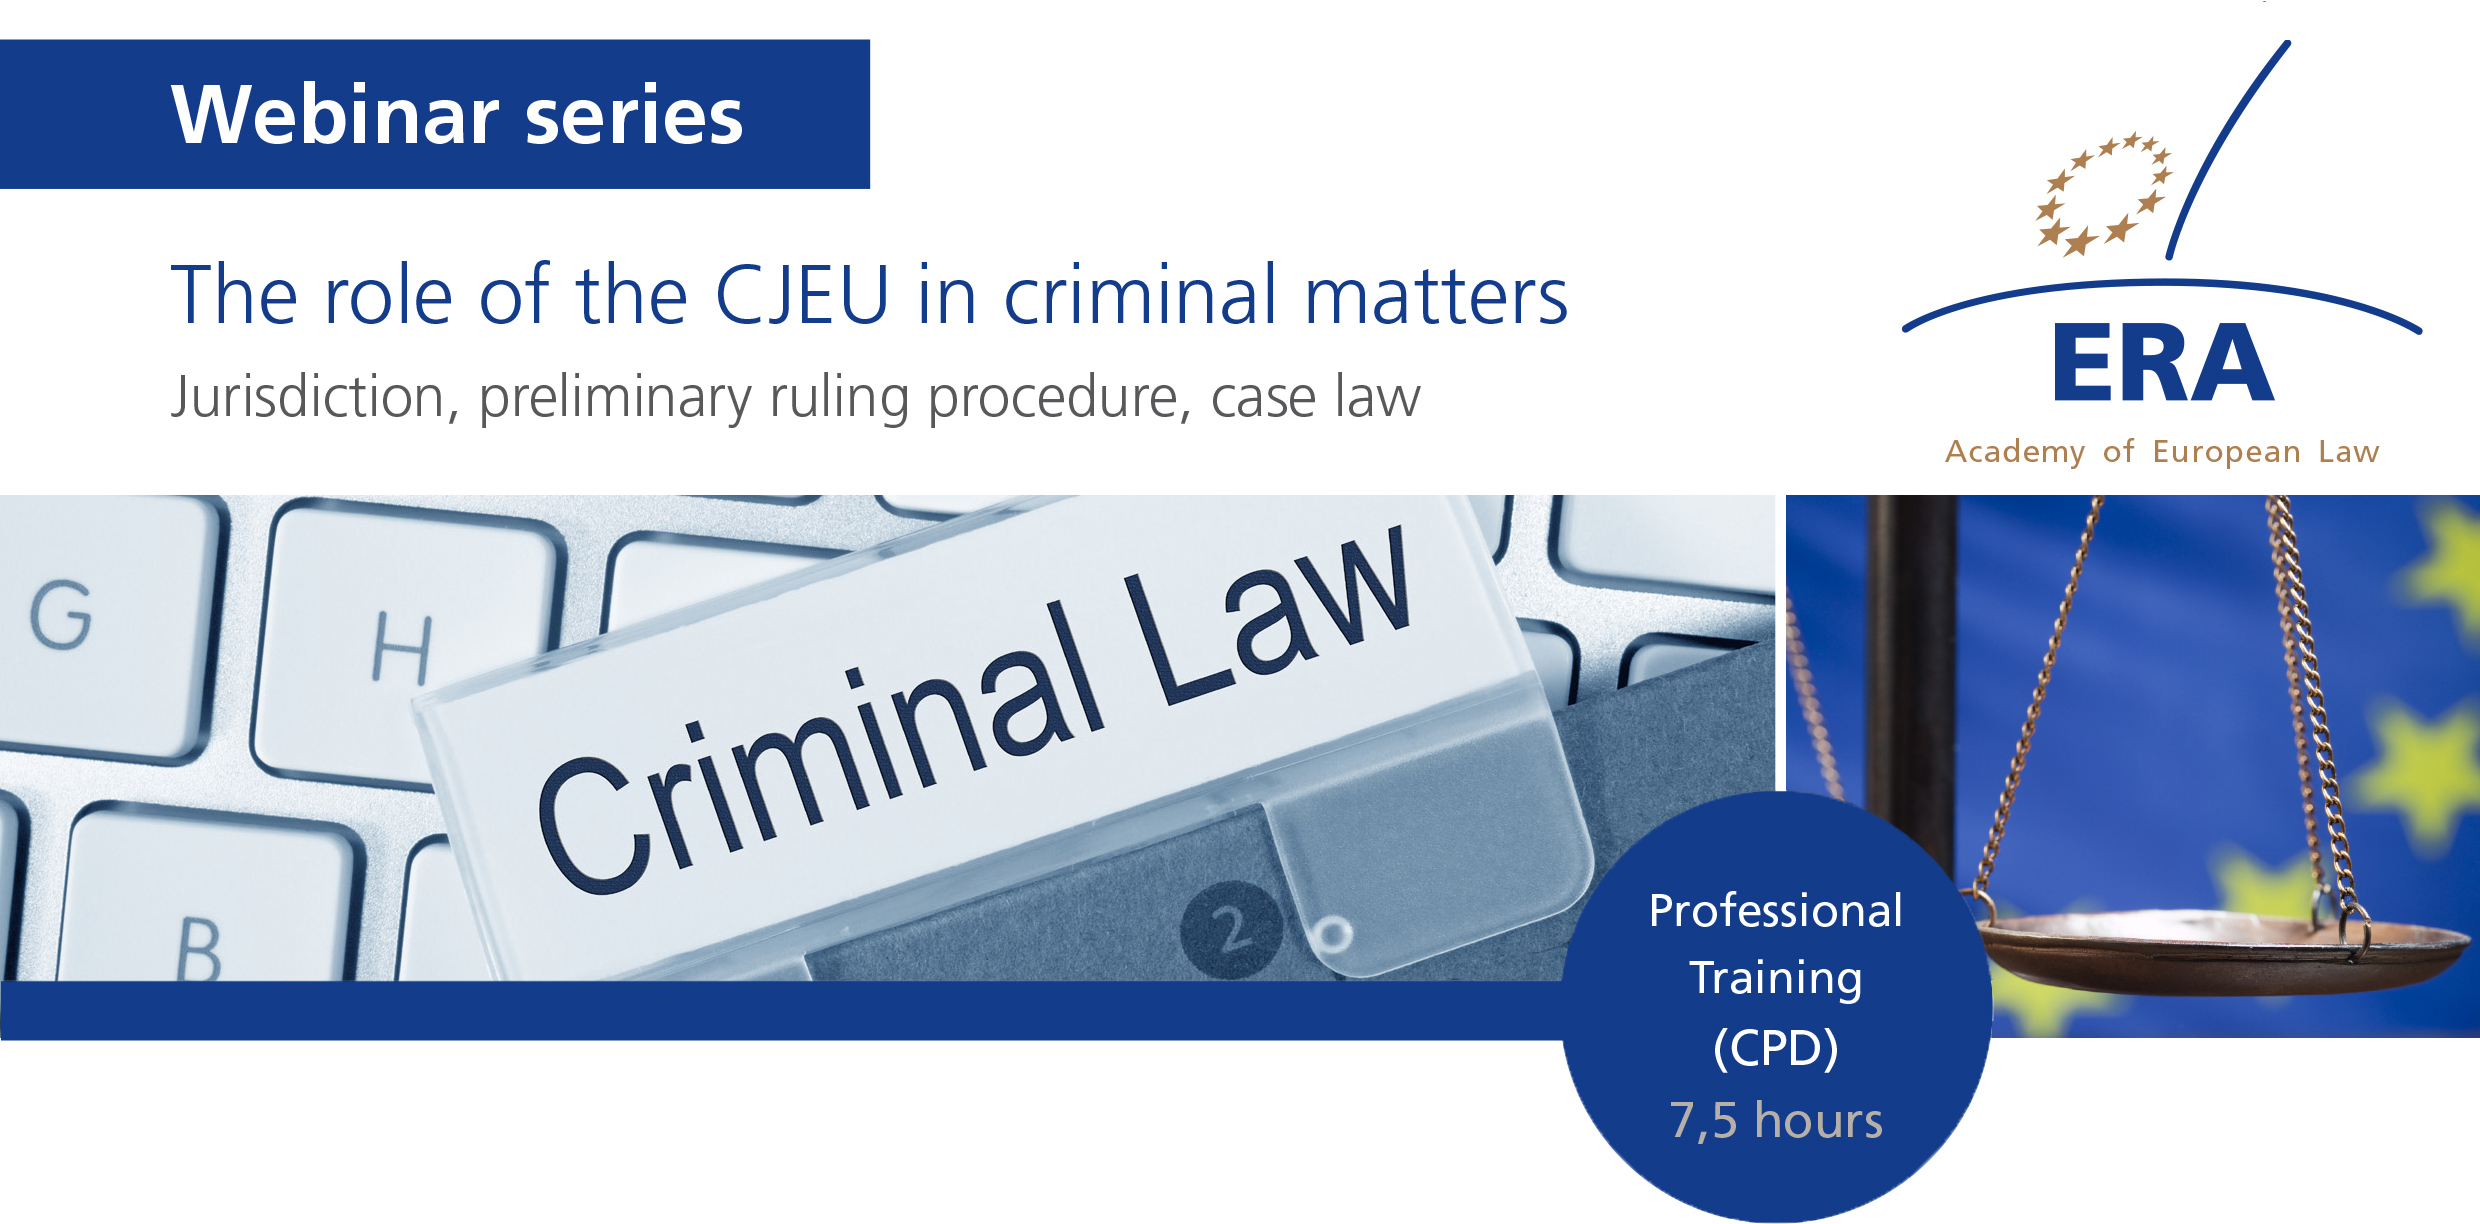 Webinar series - The role of the CJEU in criminal matters